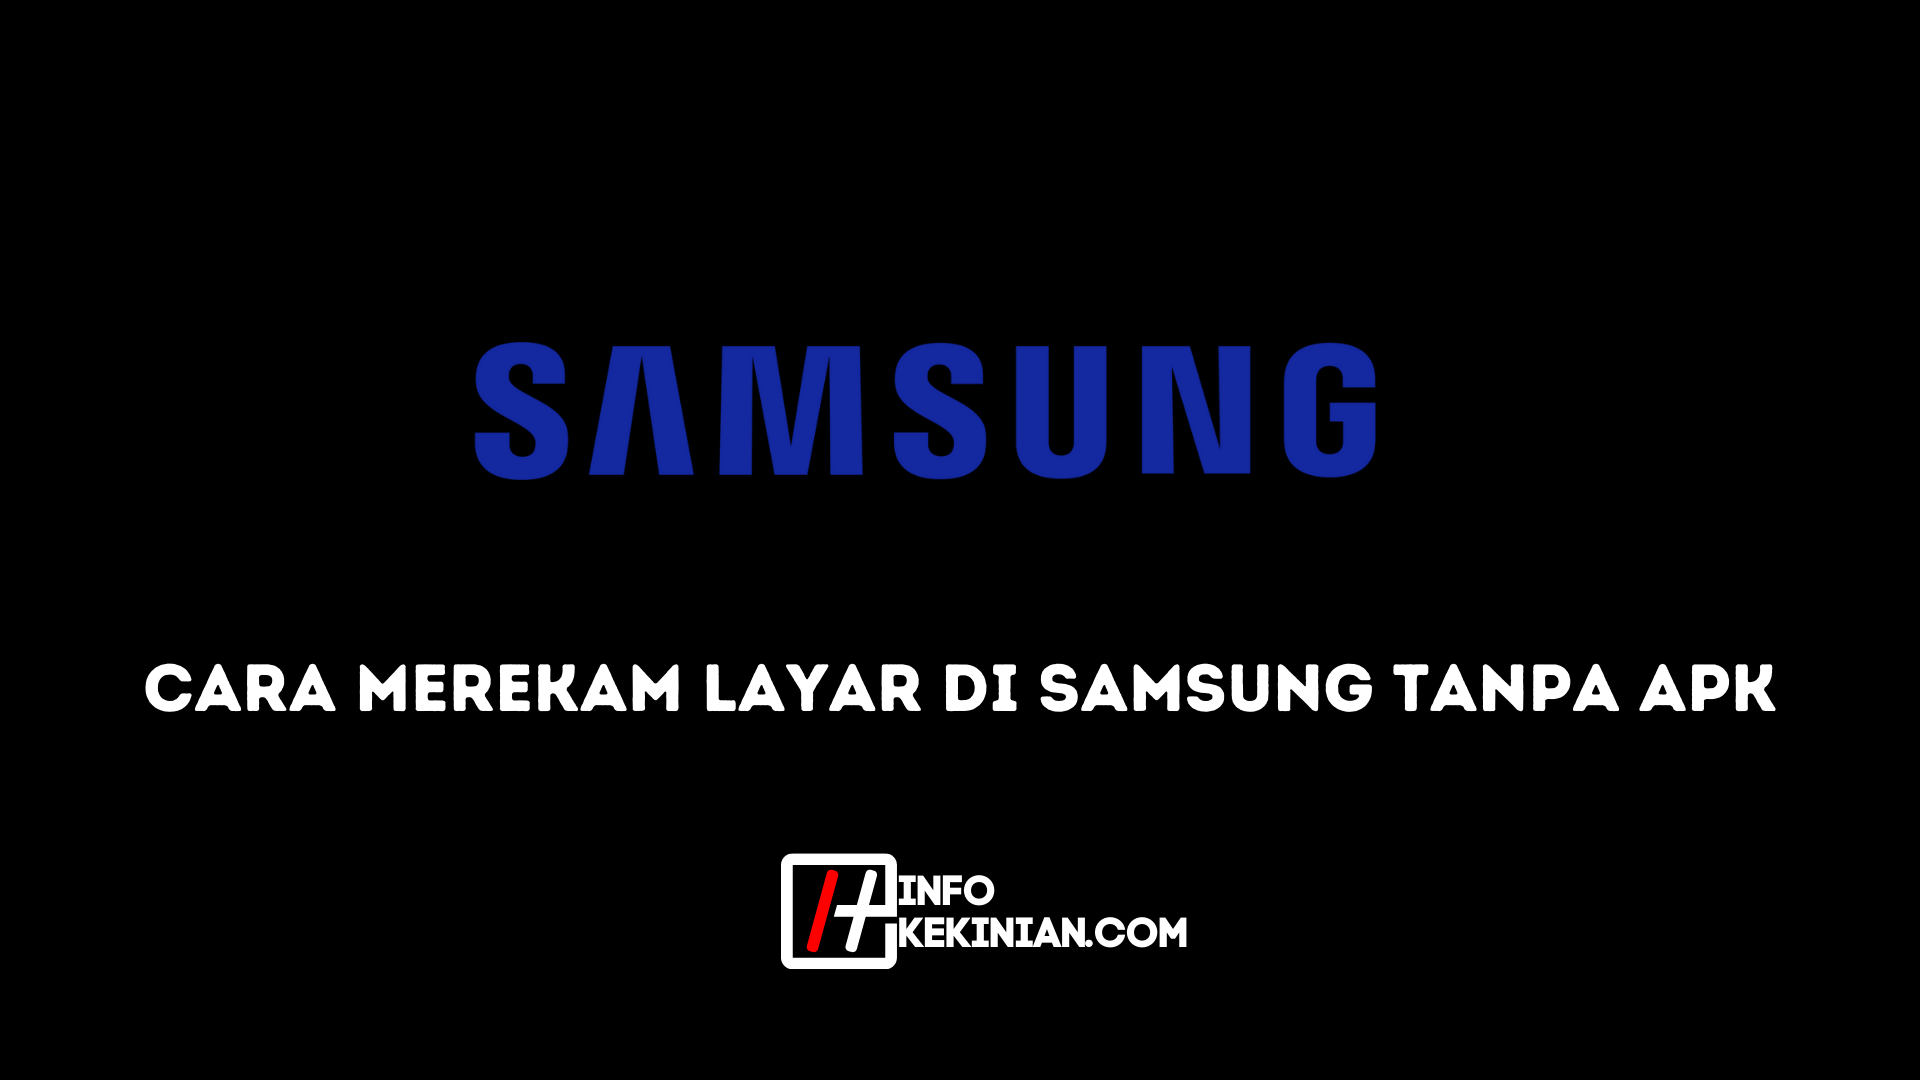 Cara Merekam Layar di Samsung Tanpa Apk